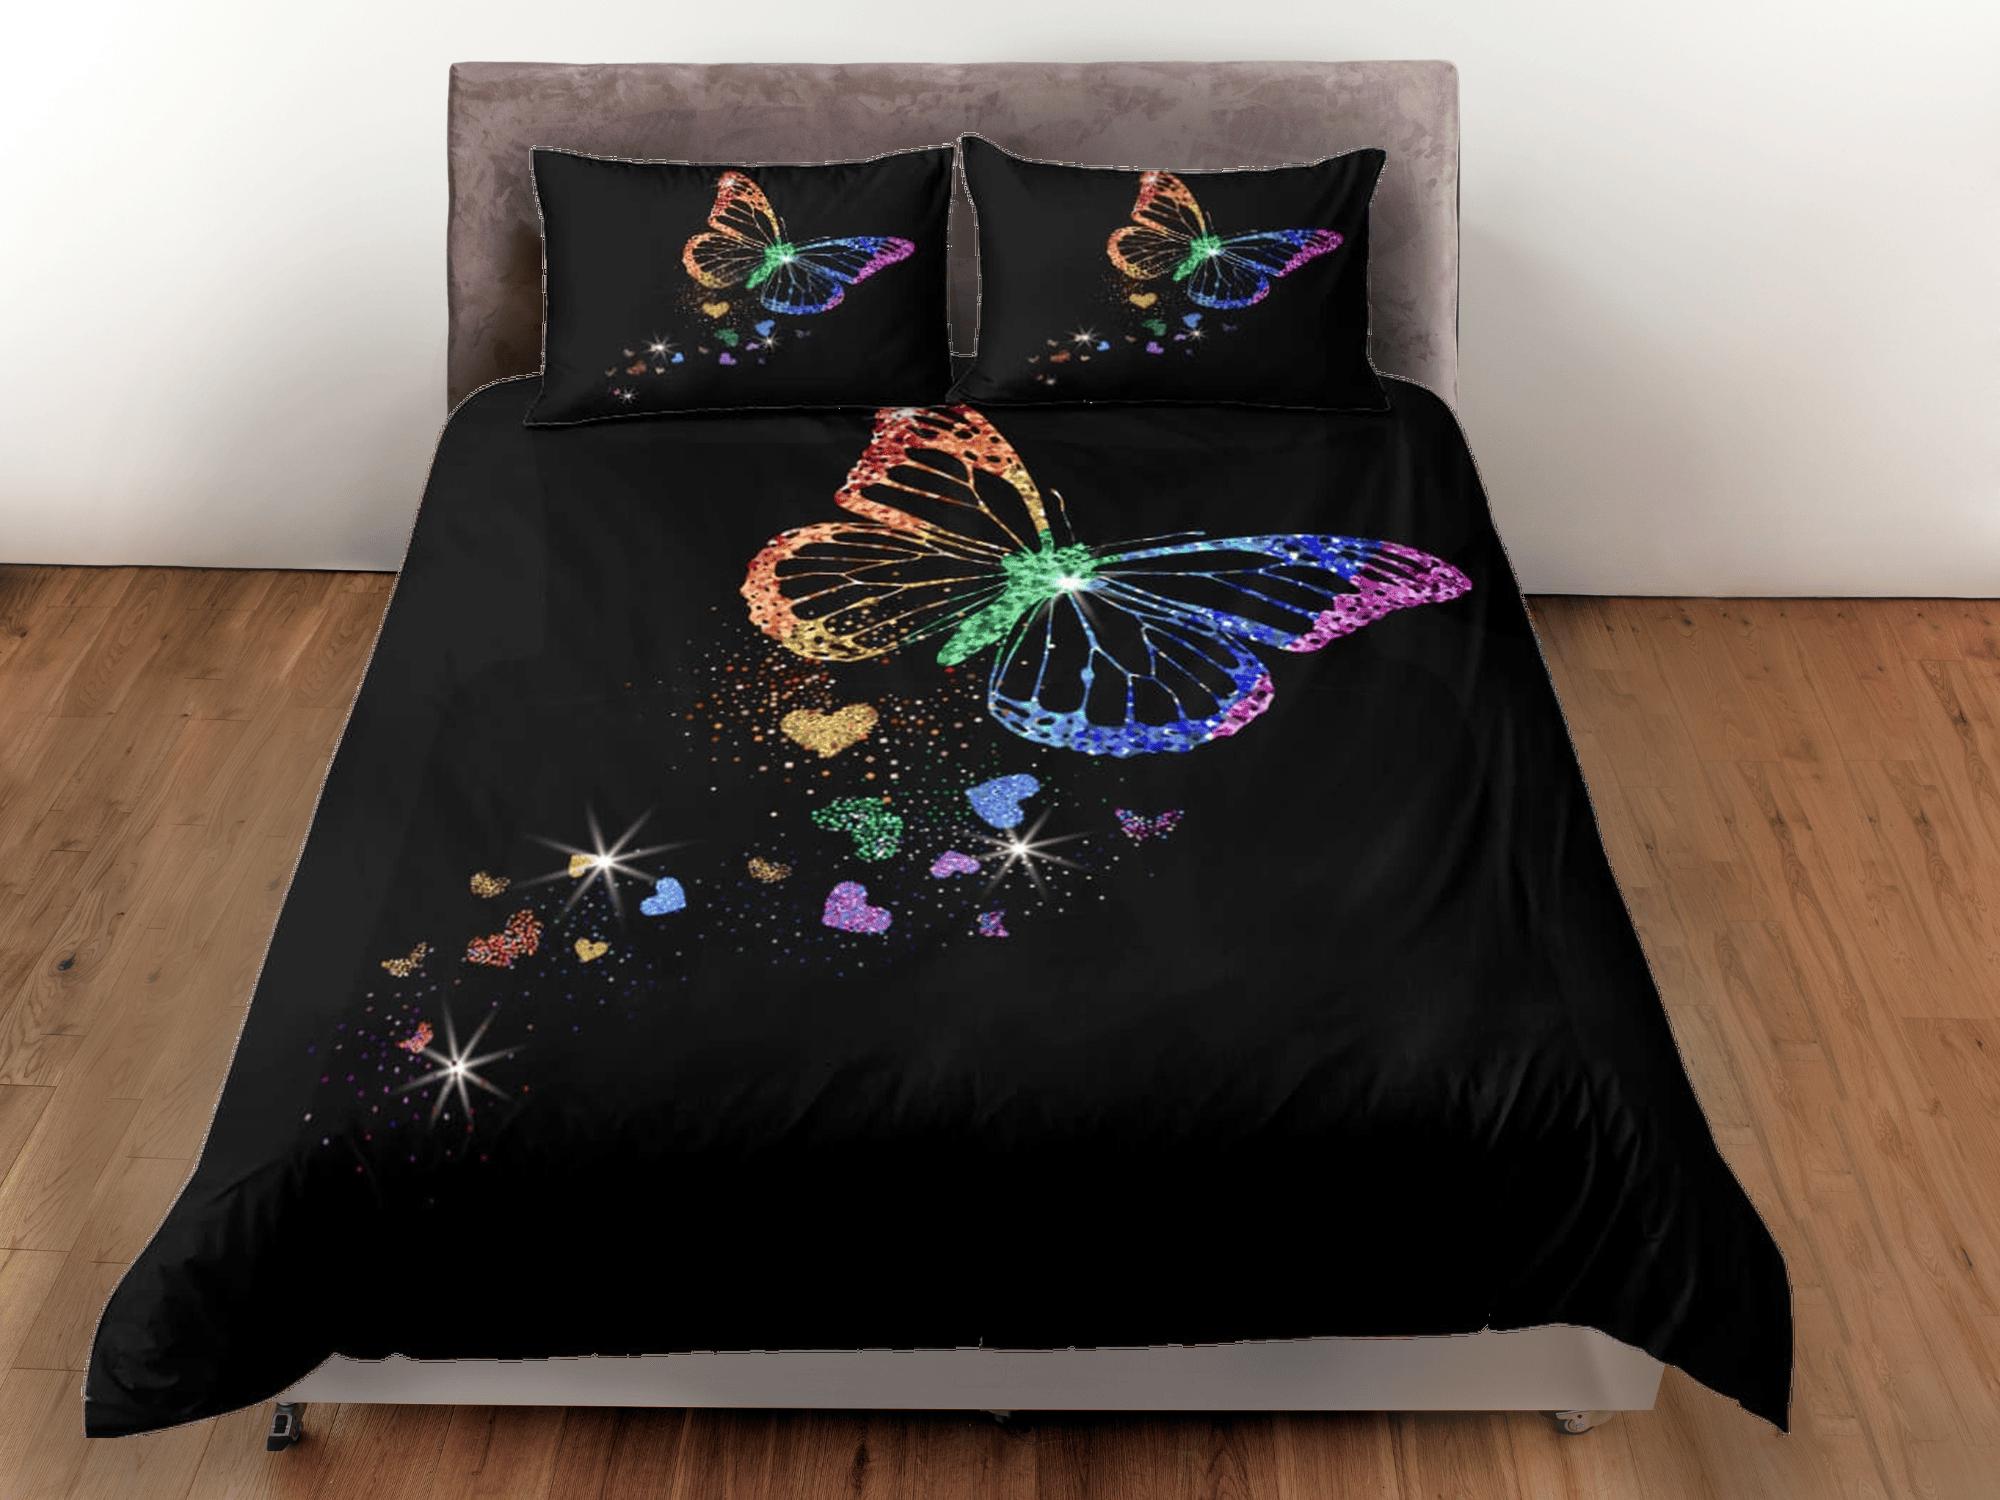 daintyduvet Lgbt butterfly rainbow bedding black duvet cover colorful dorm bedding, full size adult duvet king queen twin, nursery toddler bedding